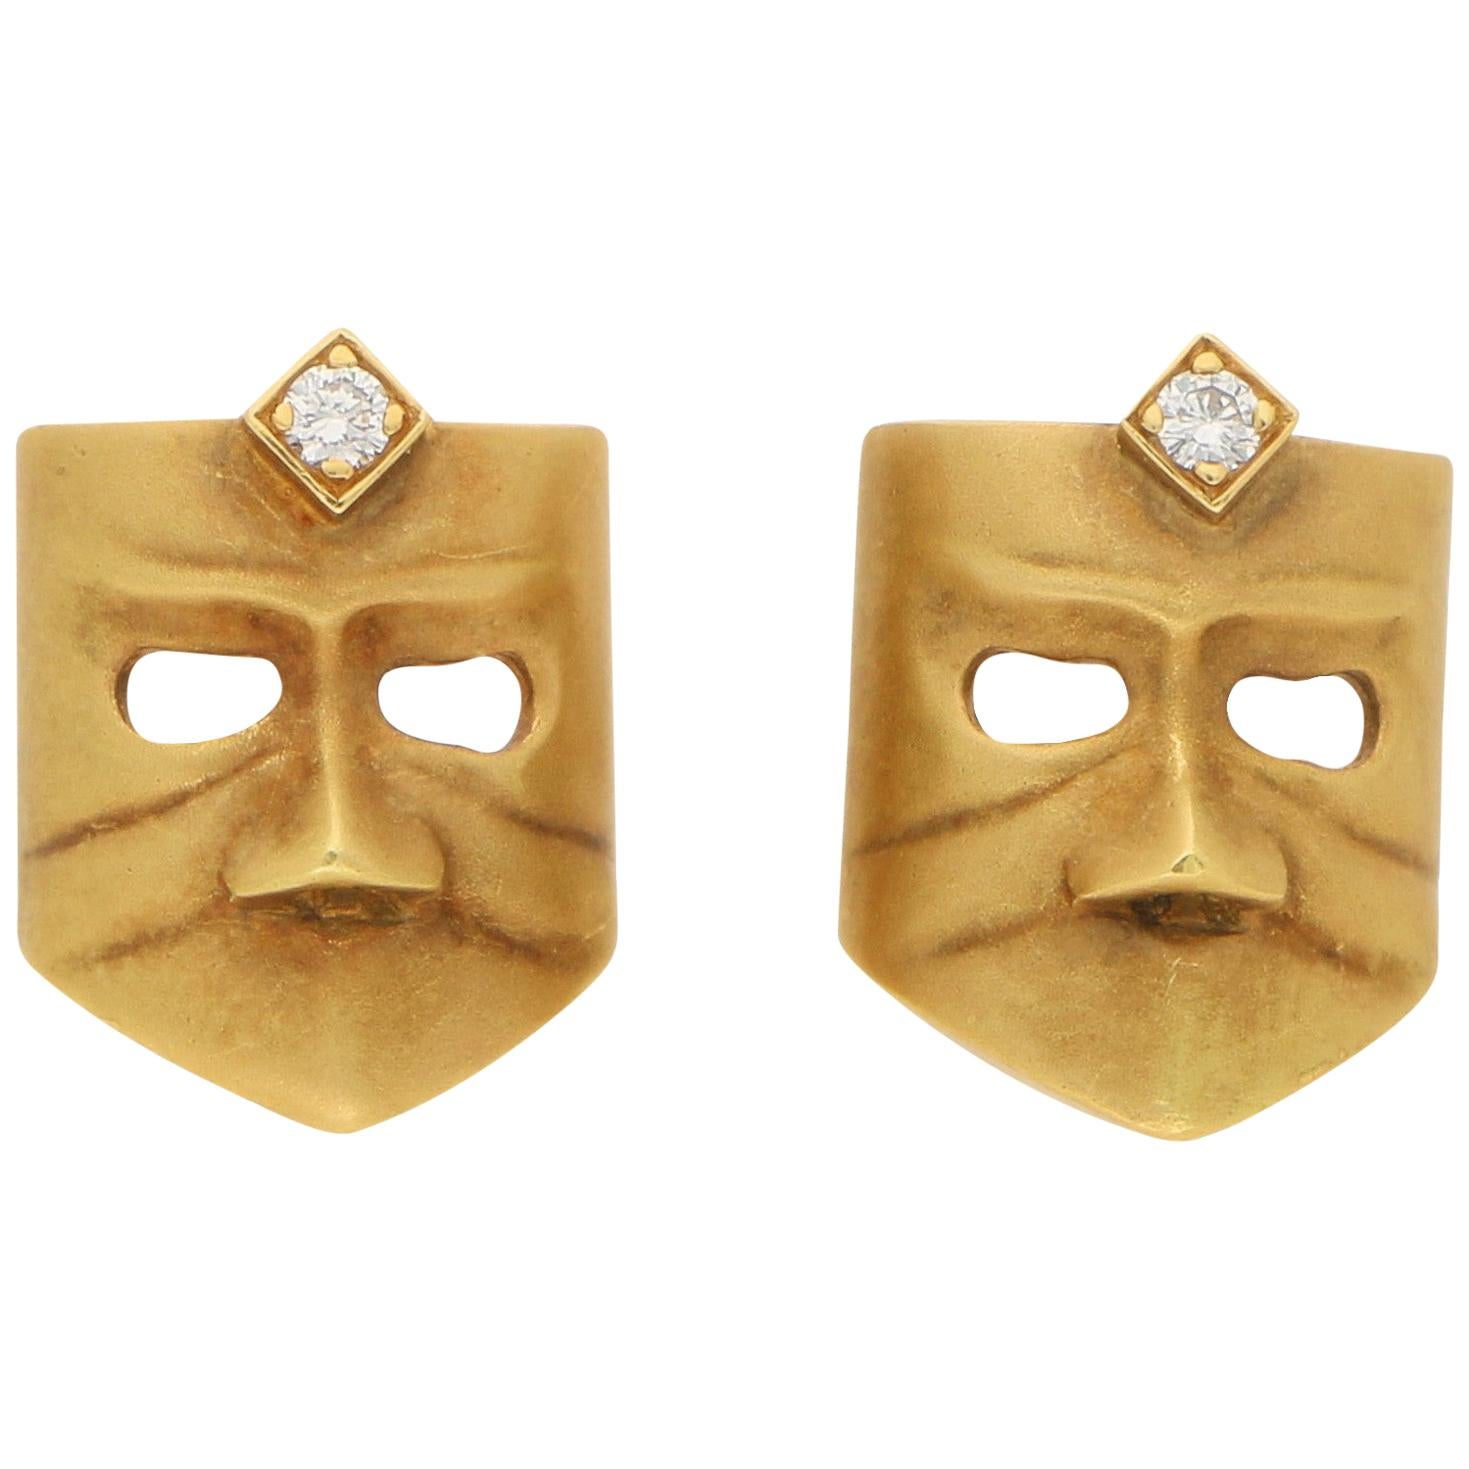 Diamond Masque Stud Earrings in 18 Carat Gold